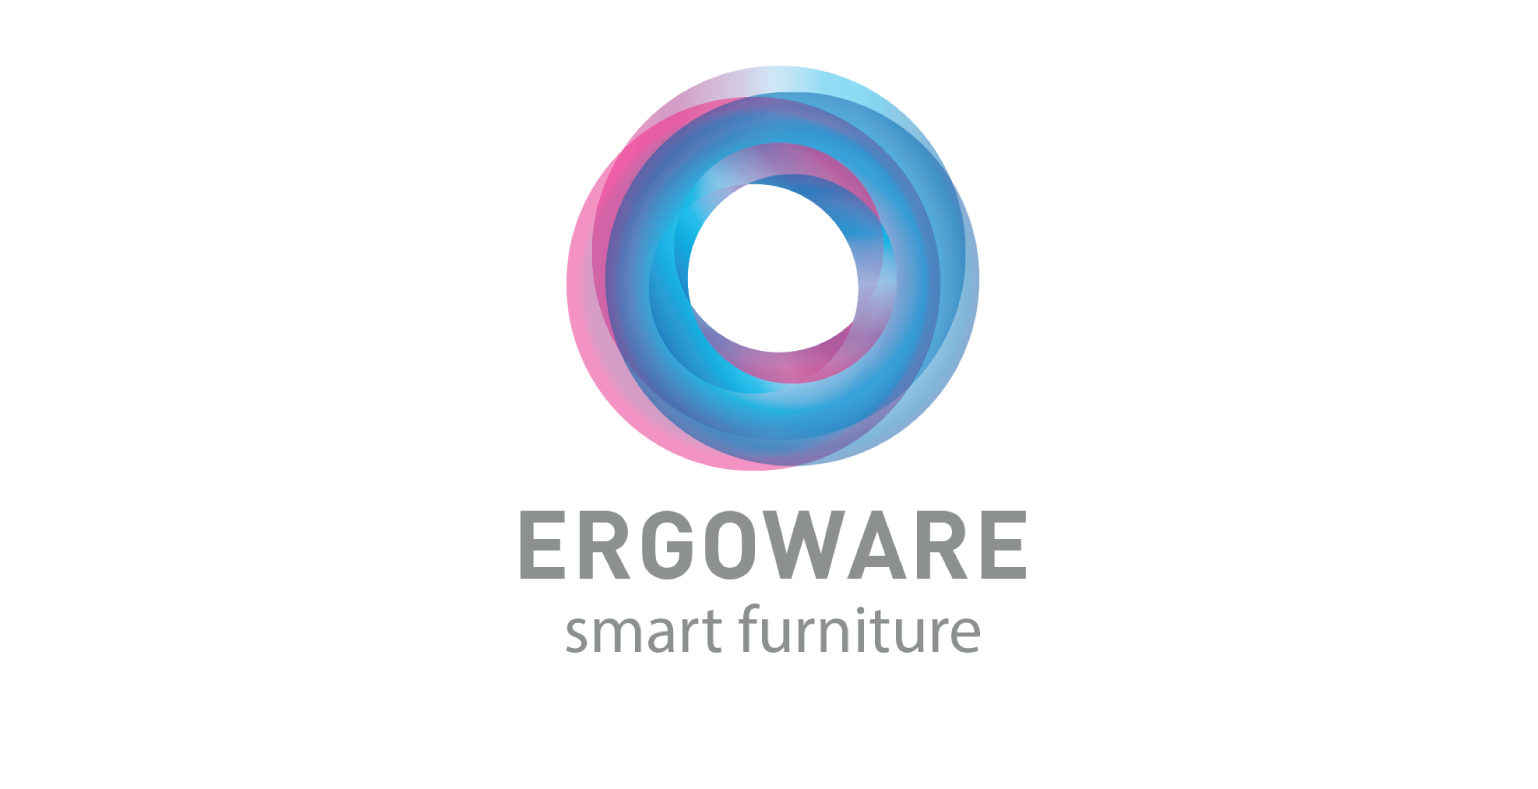 Creation of the ERGOWARE brand